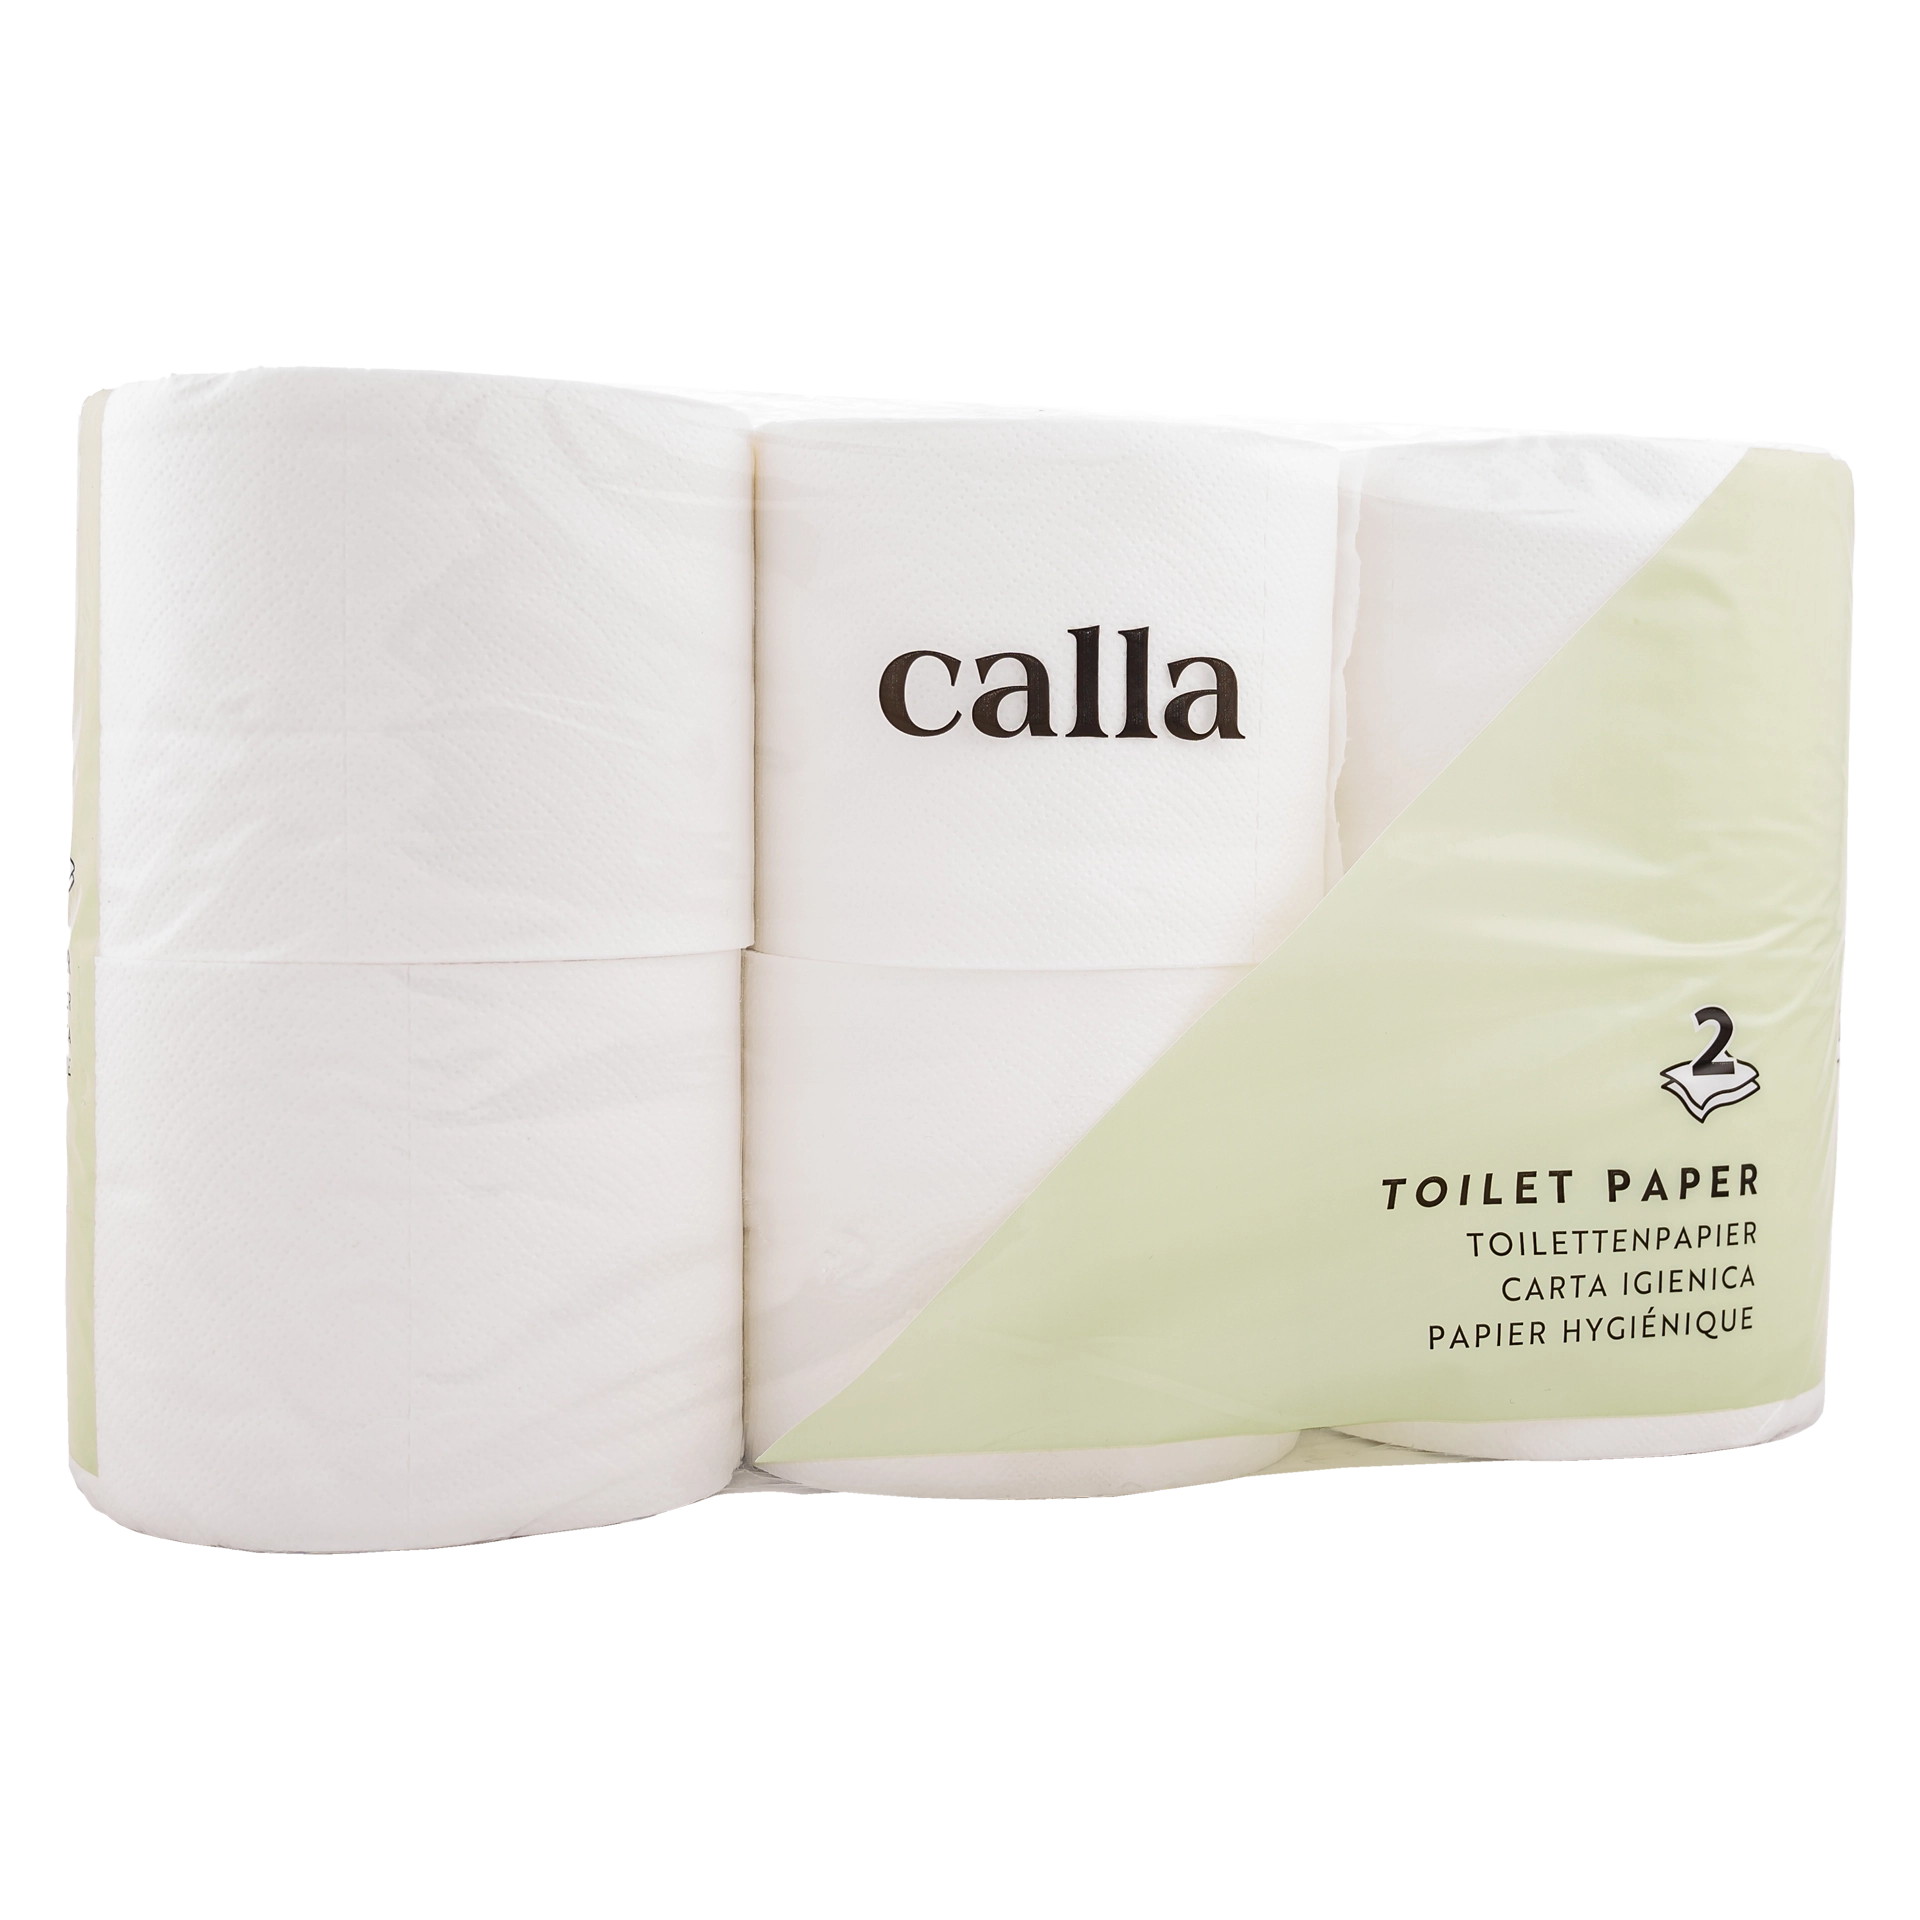 Toilettenpapier | Calla weiß 2lg. 280 Abrisse/12 cm